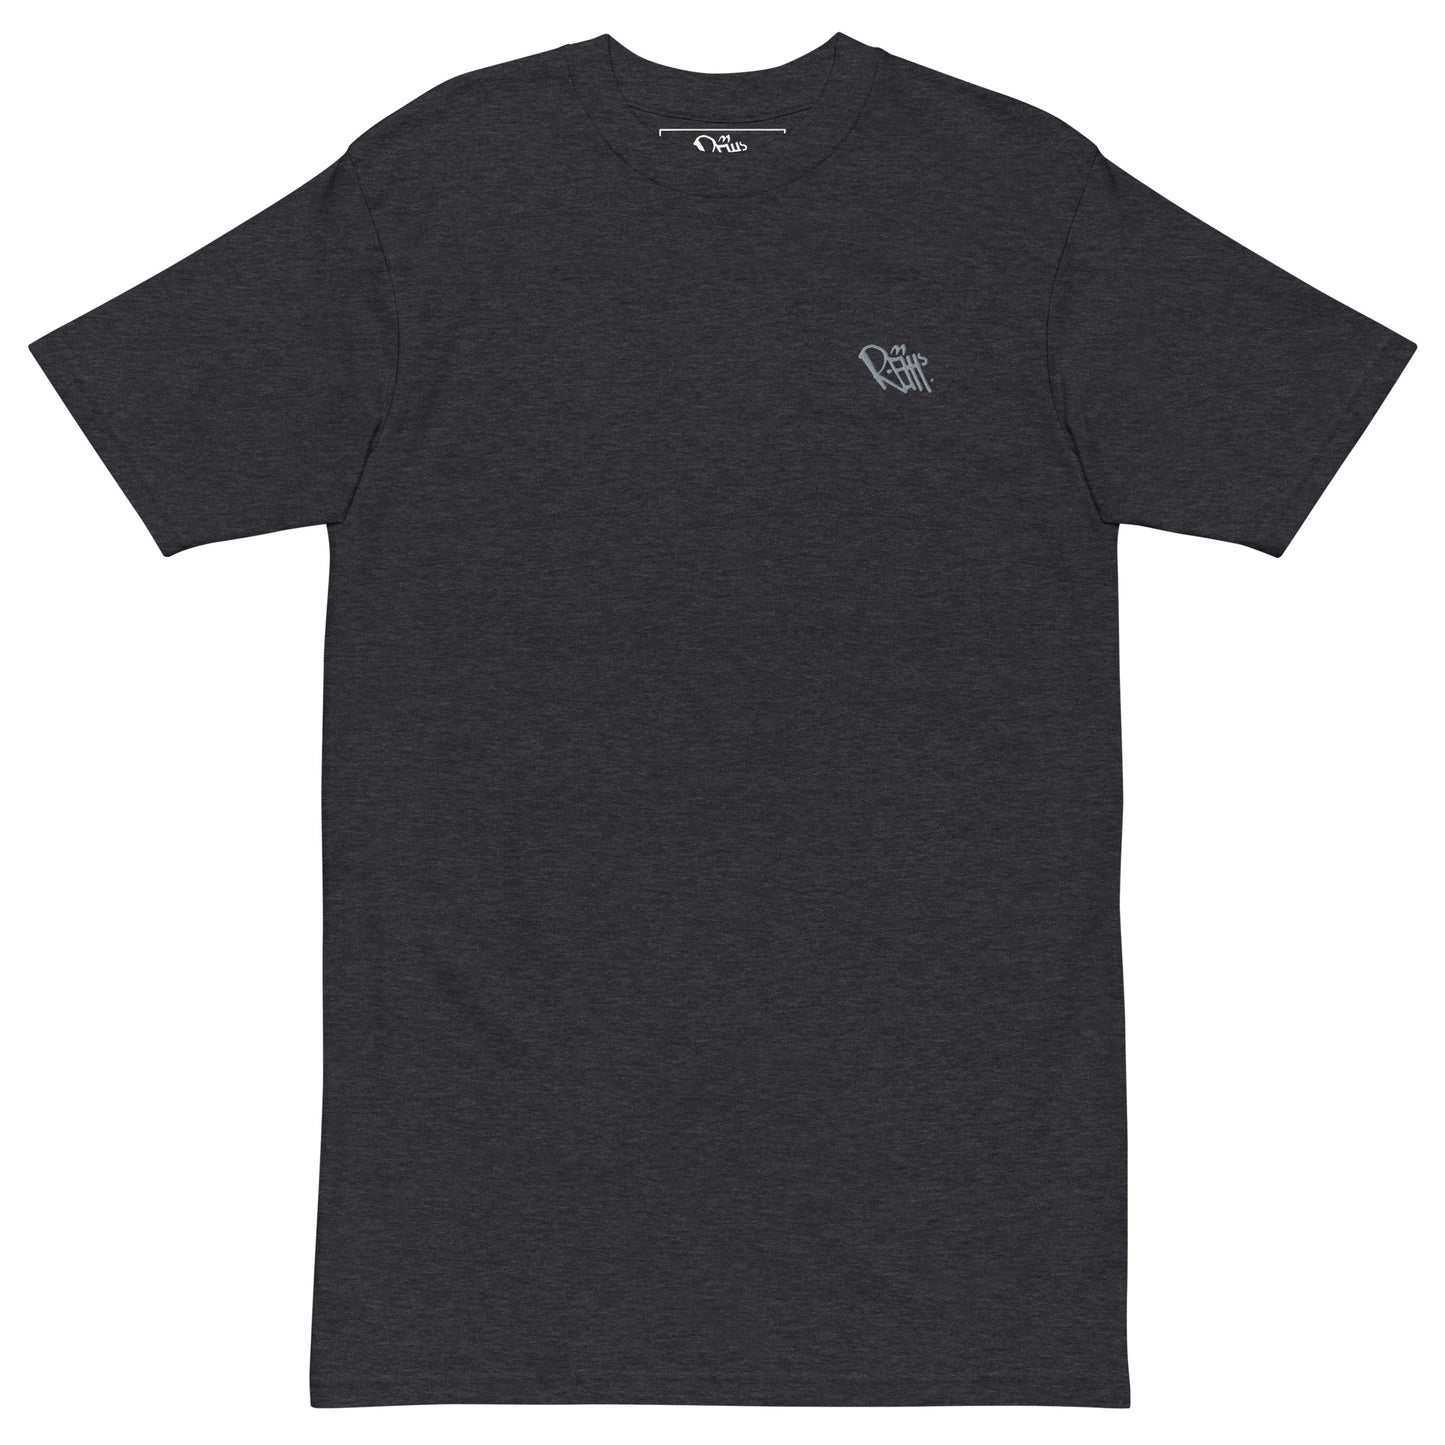 REHH Logo - Tee Shirt (Charcoal Grey)